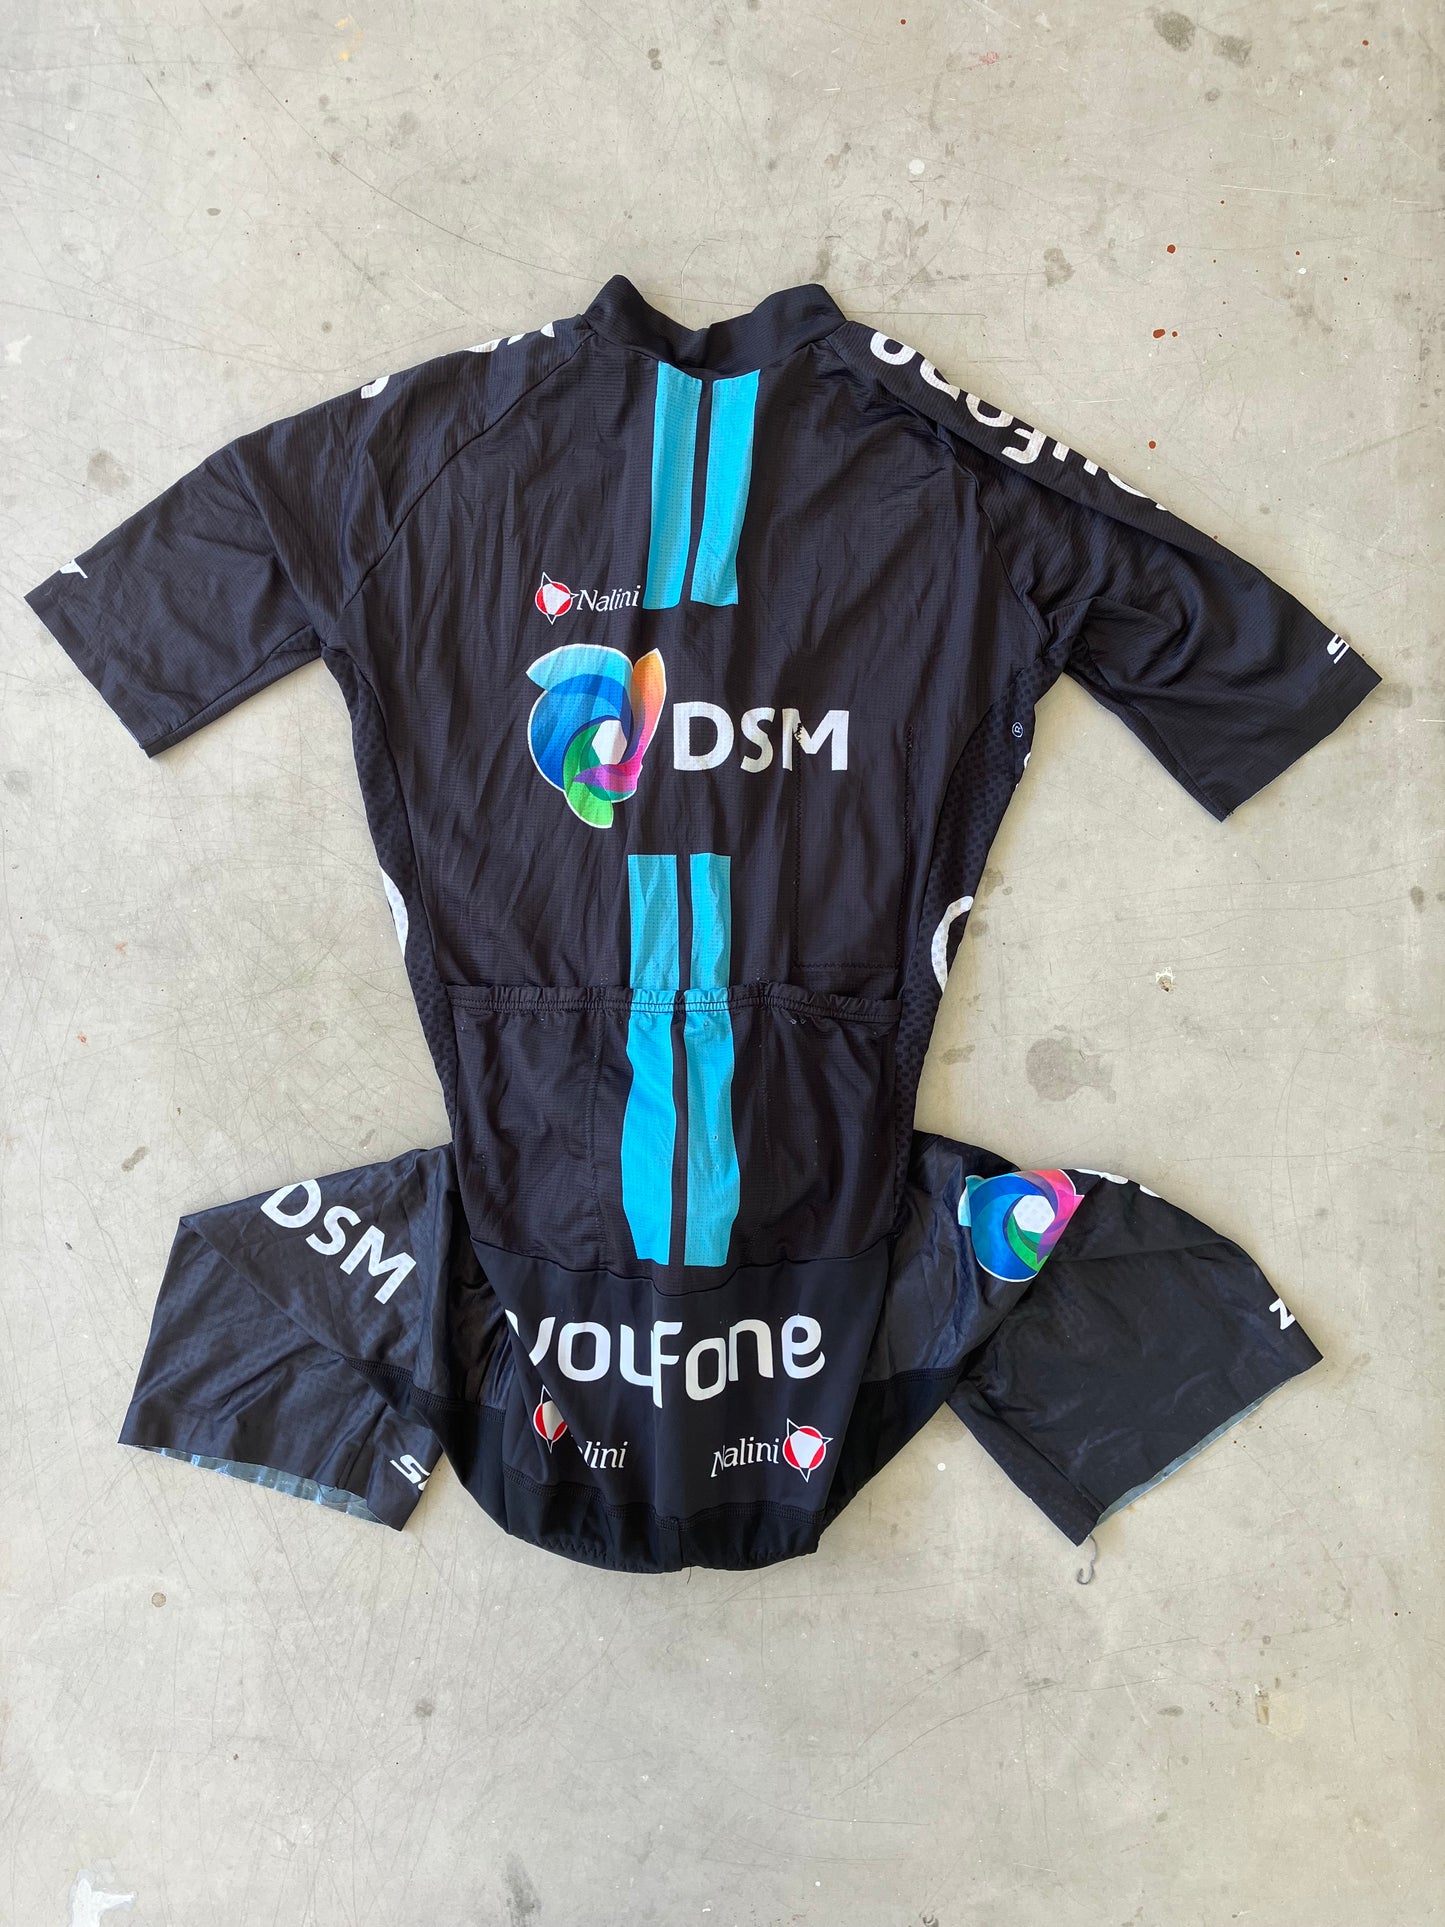 DSM | Nalini Summer Road Suit | S | Rider-Issued Pro Team Kit